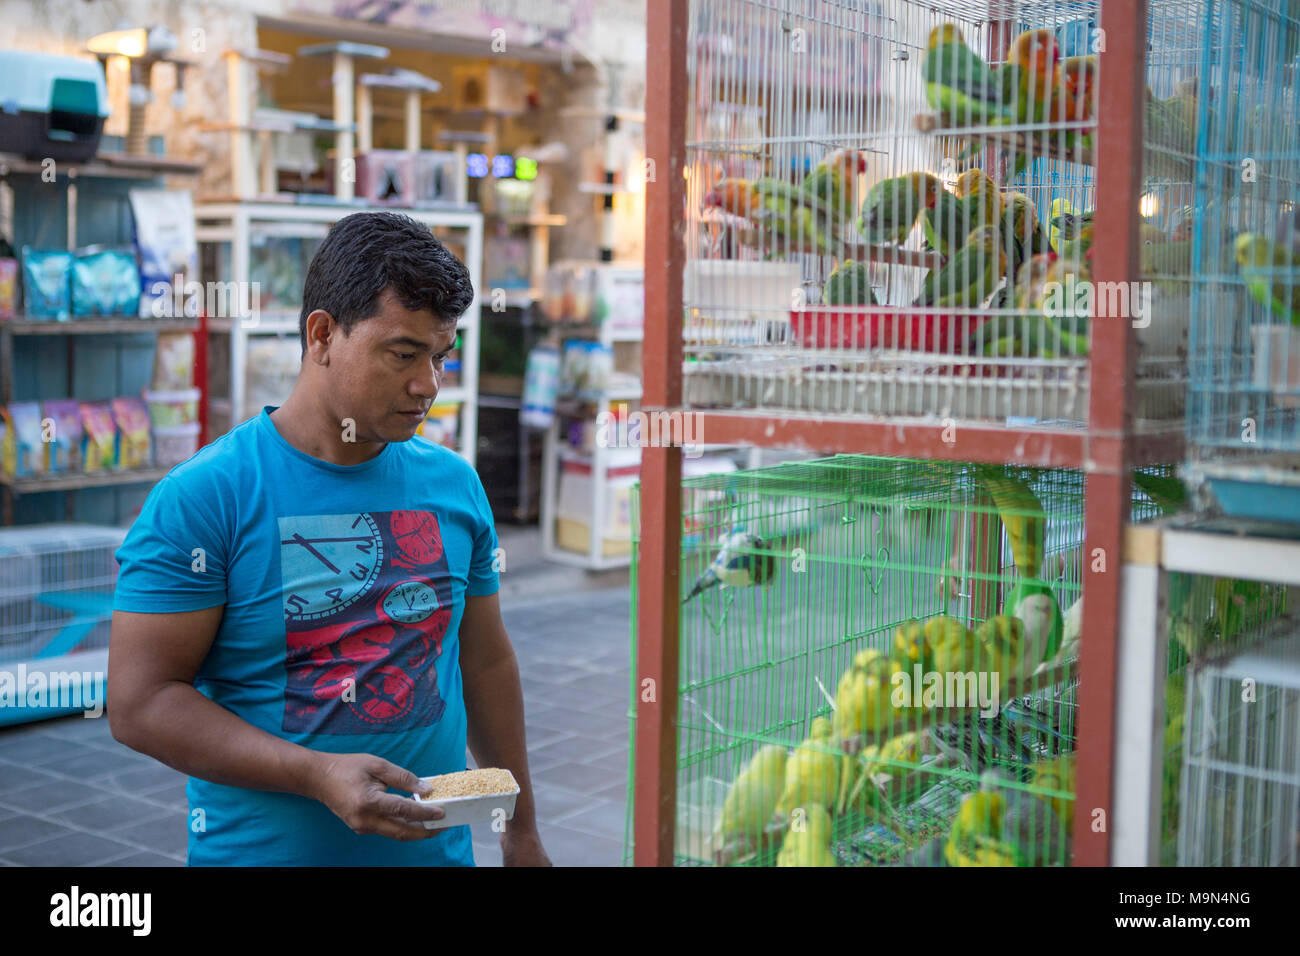 A man feeds caged birds at a bird market in Doha, Qatar Stock Photo